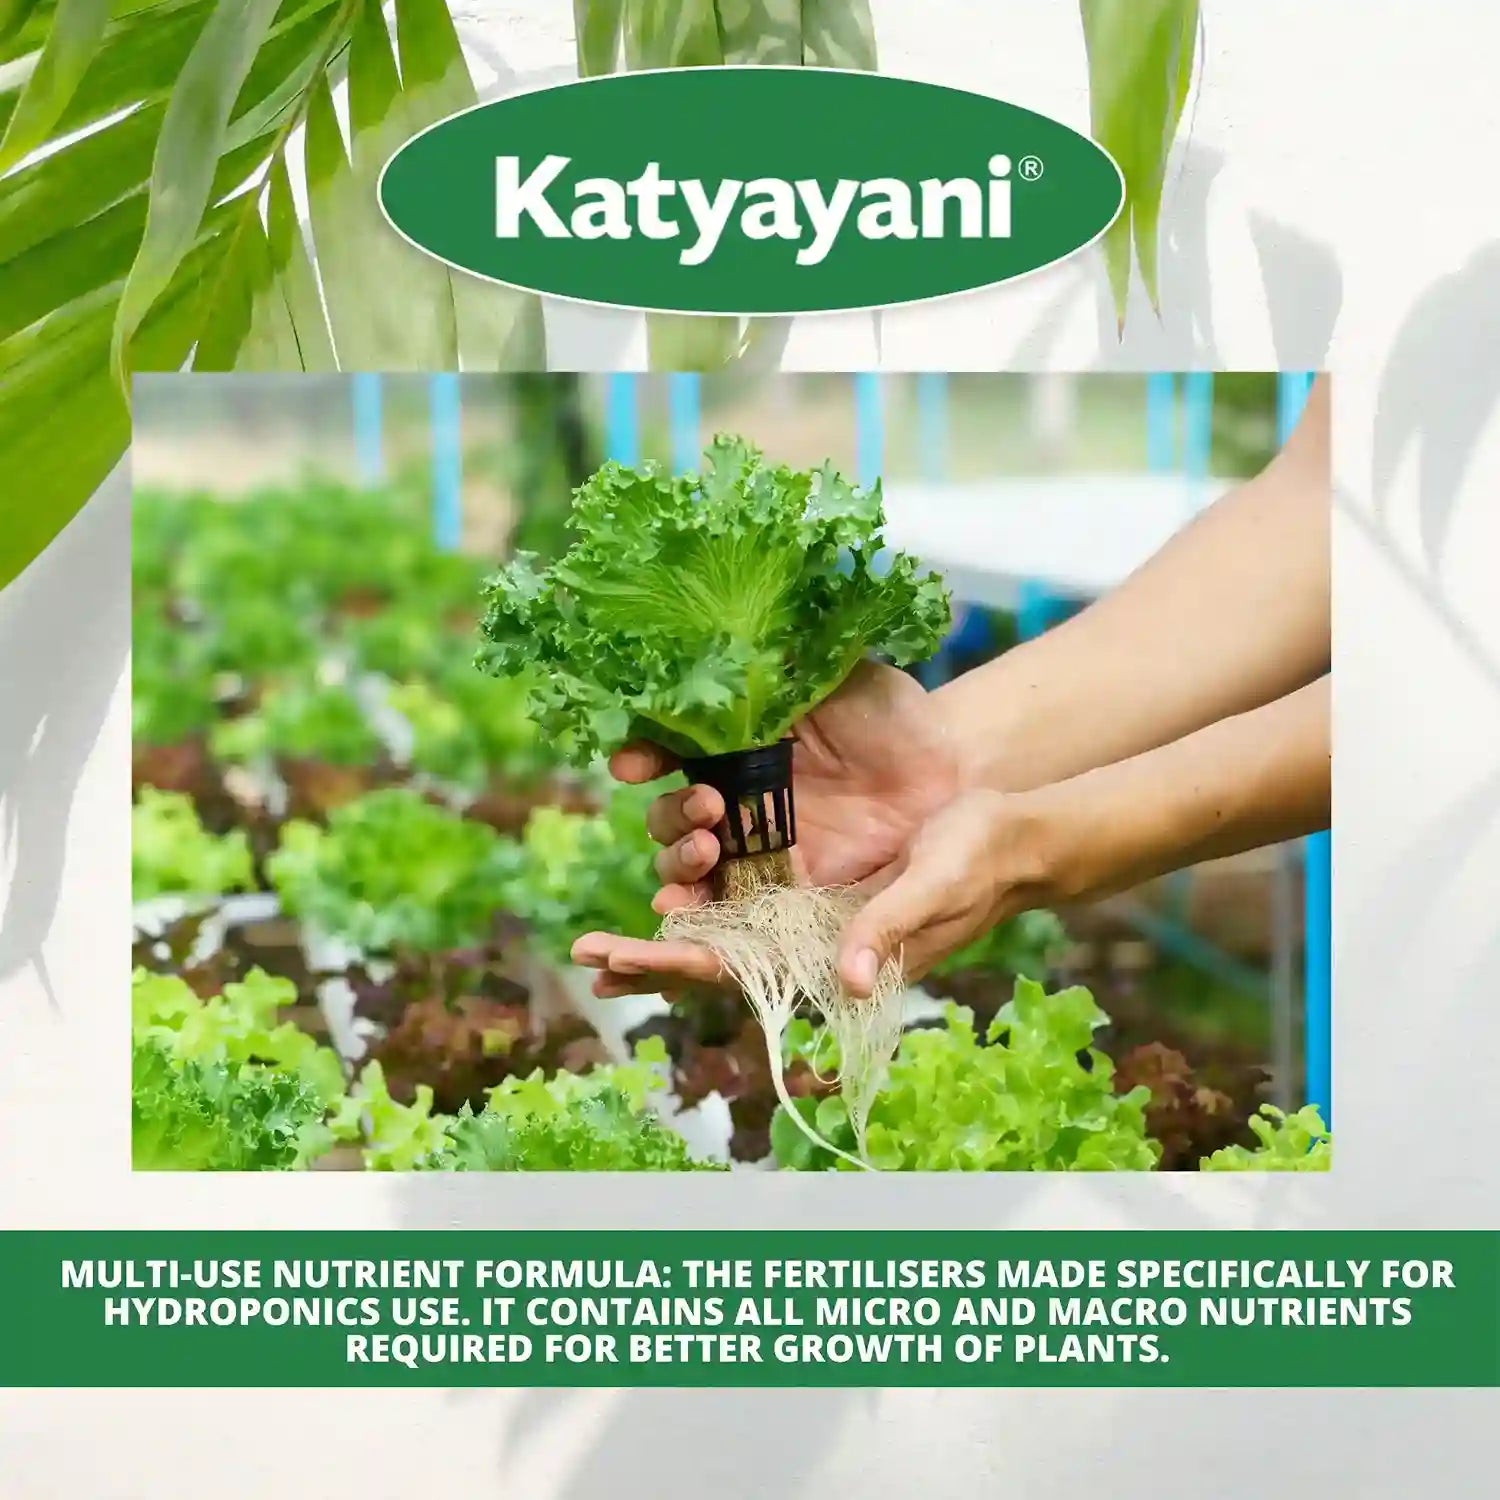 Hydroponics All in One Combo Katyayani Organics